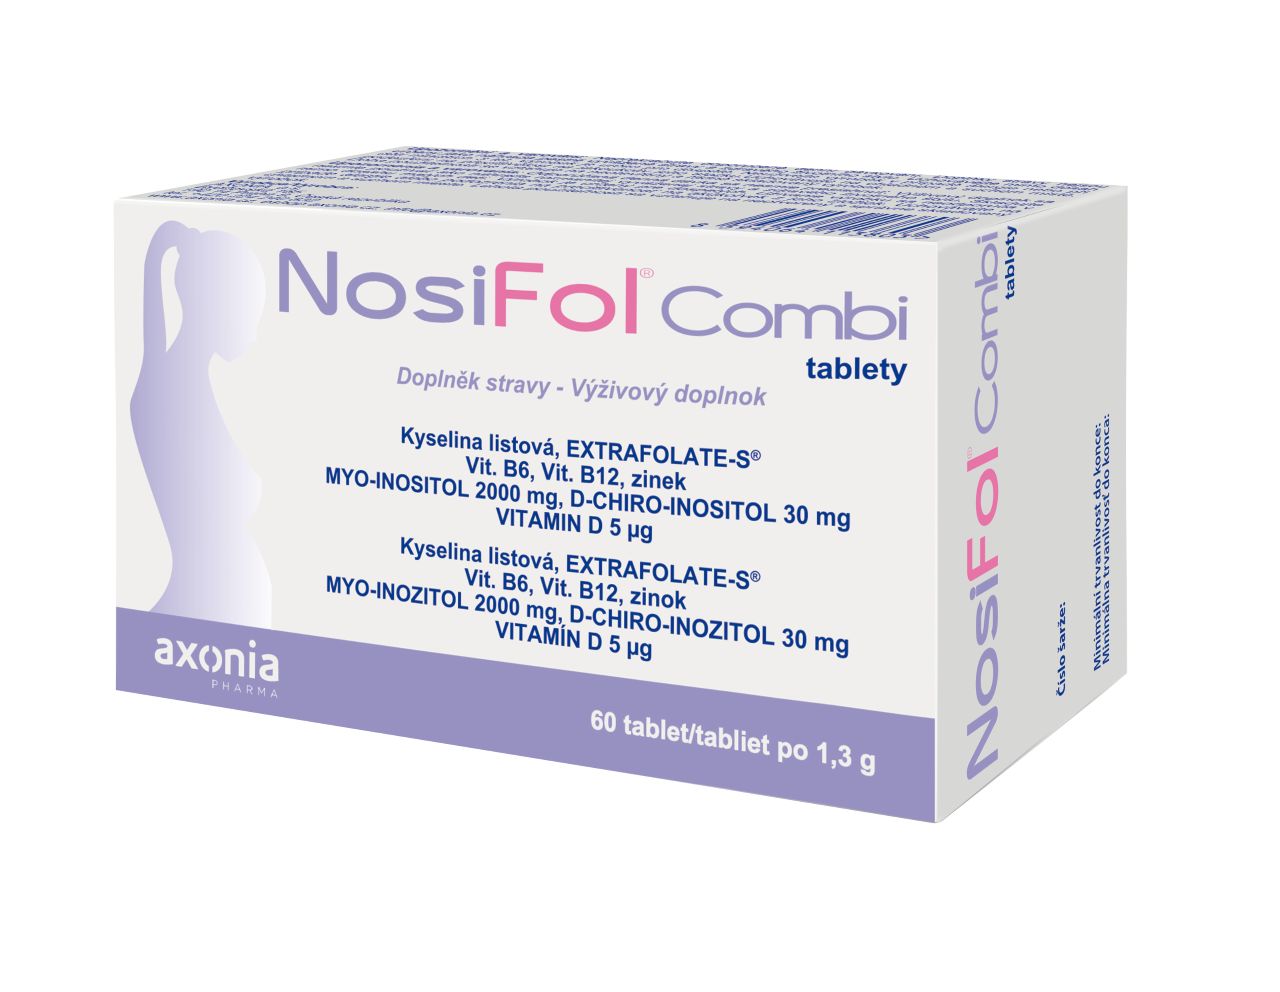 NosiFol Combi 60 tablet NosiFol